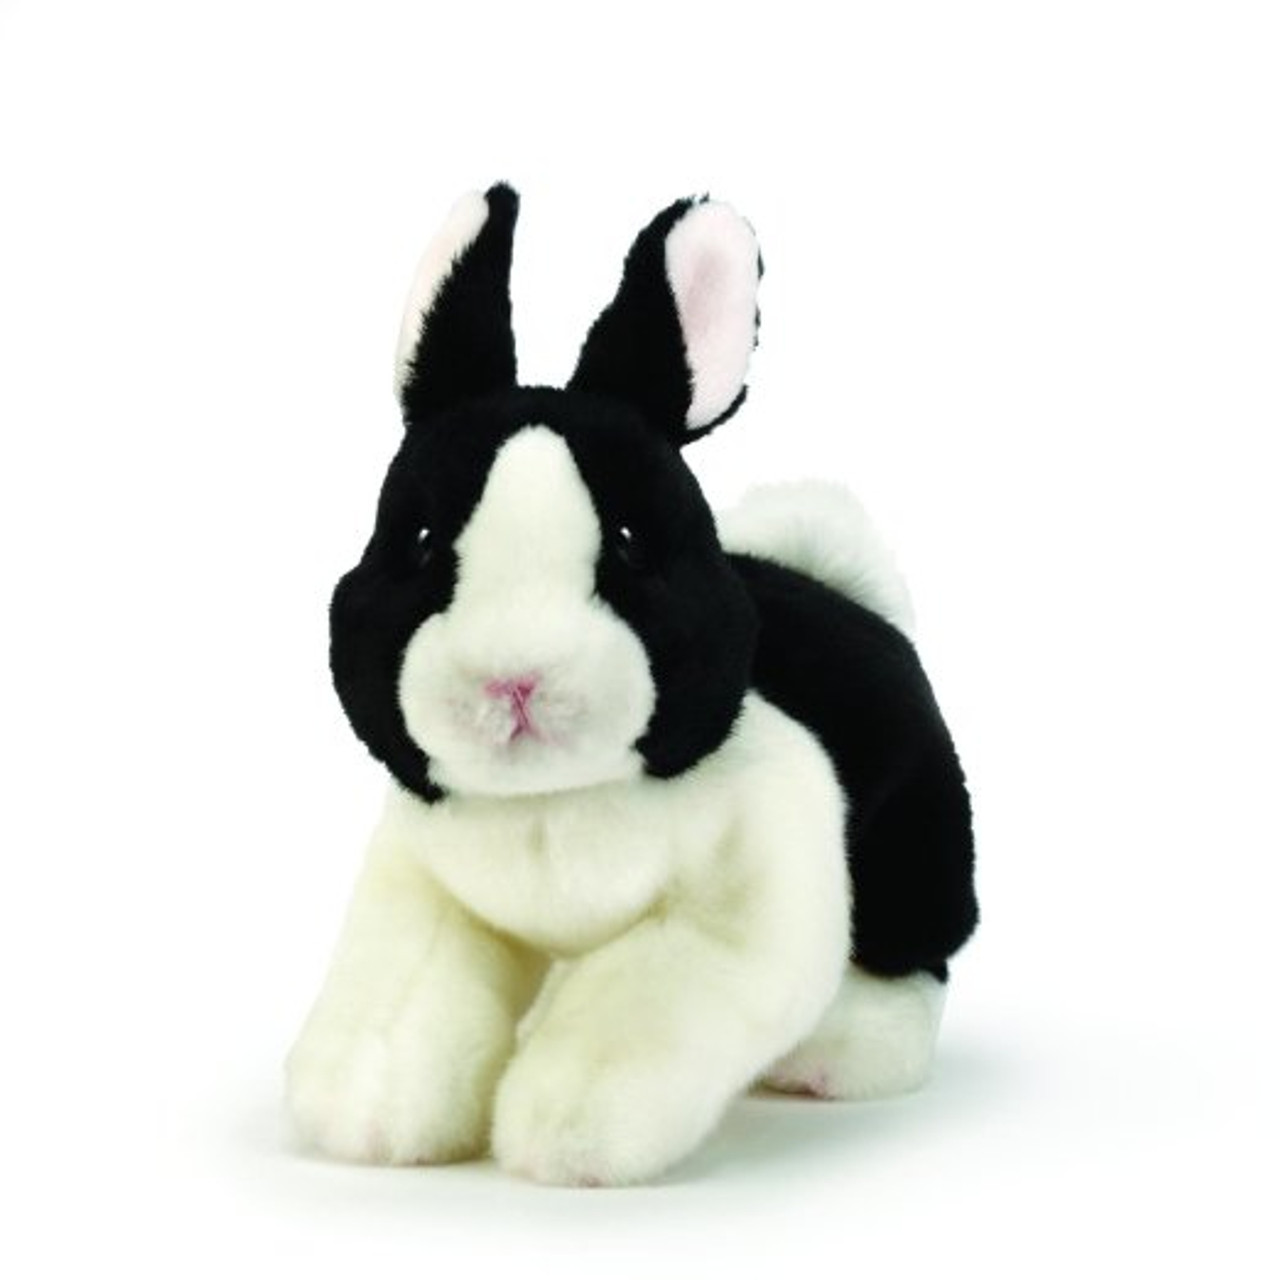 Dutch Bunny Rabbit Plush Toy Black and White Large